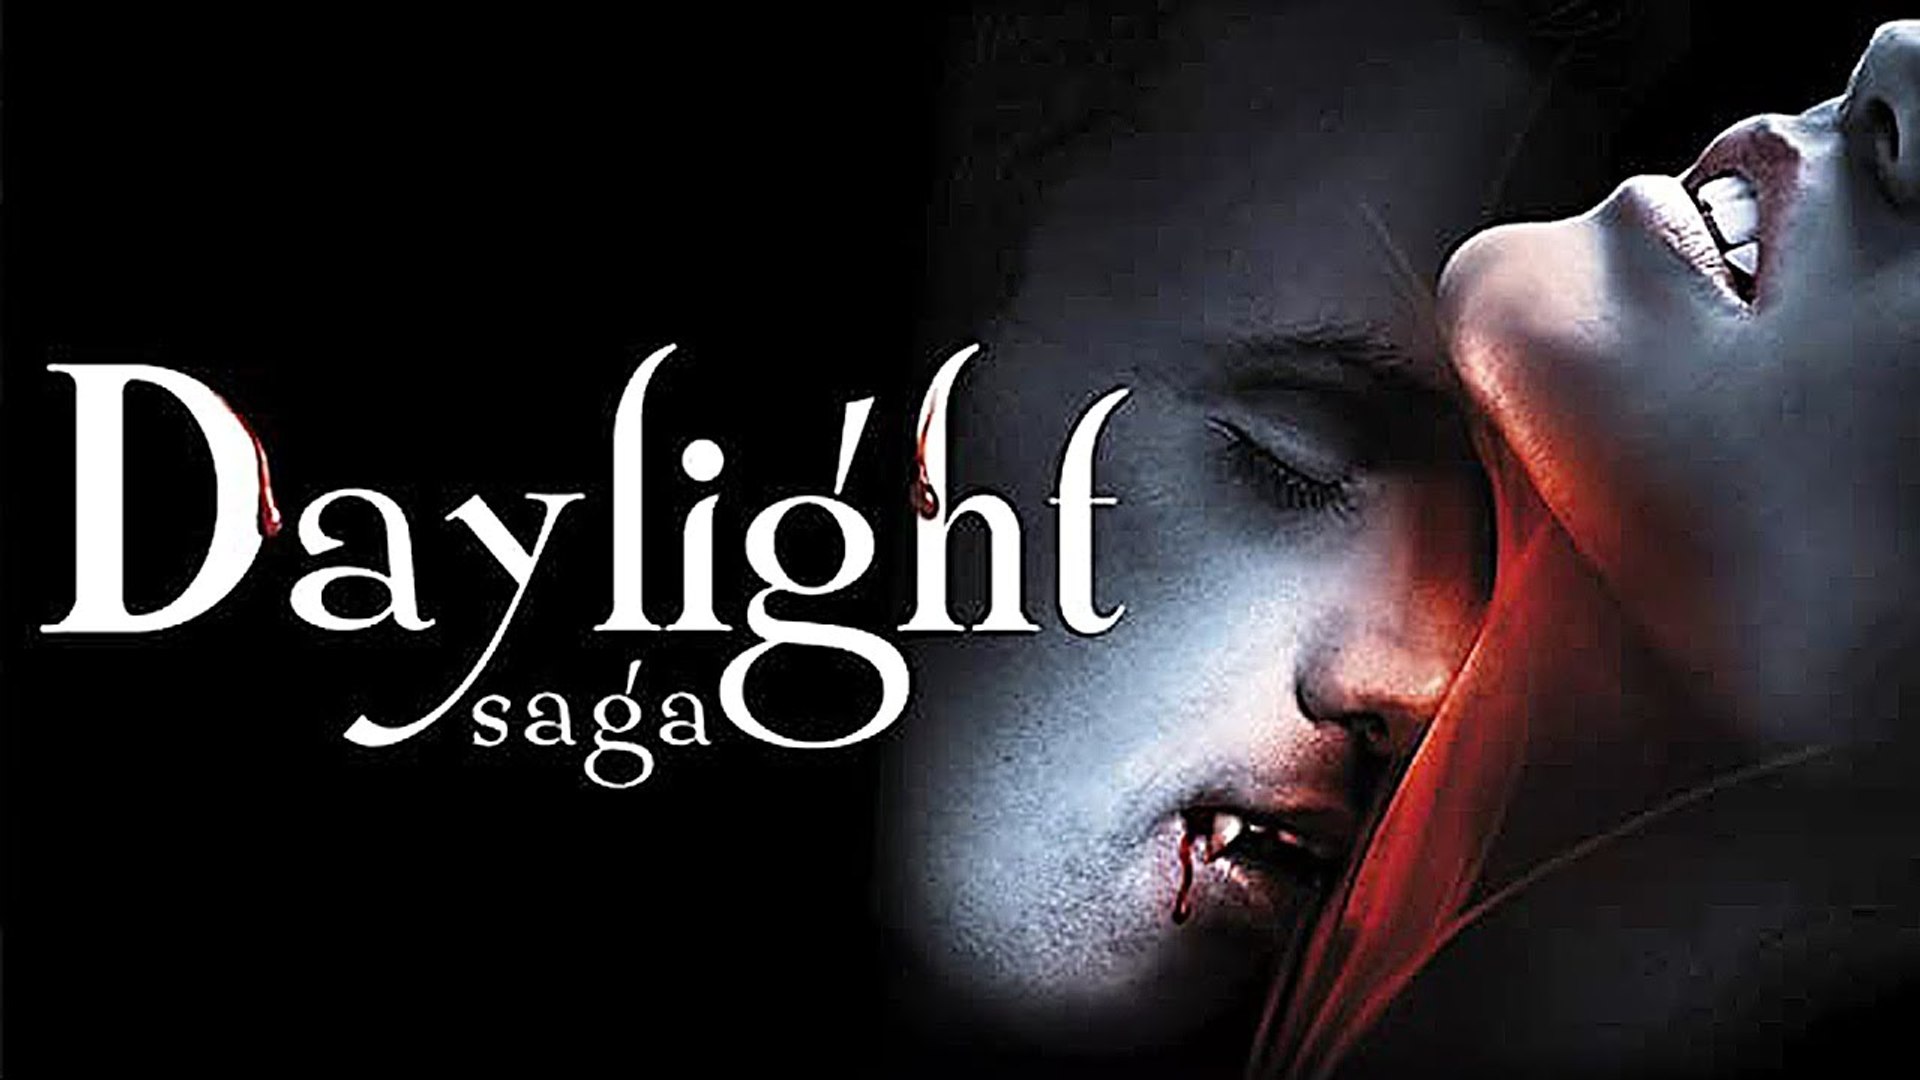 DAYLIGHT SAGA | Film Complet en Français | Romance, Fantastique